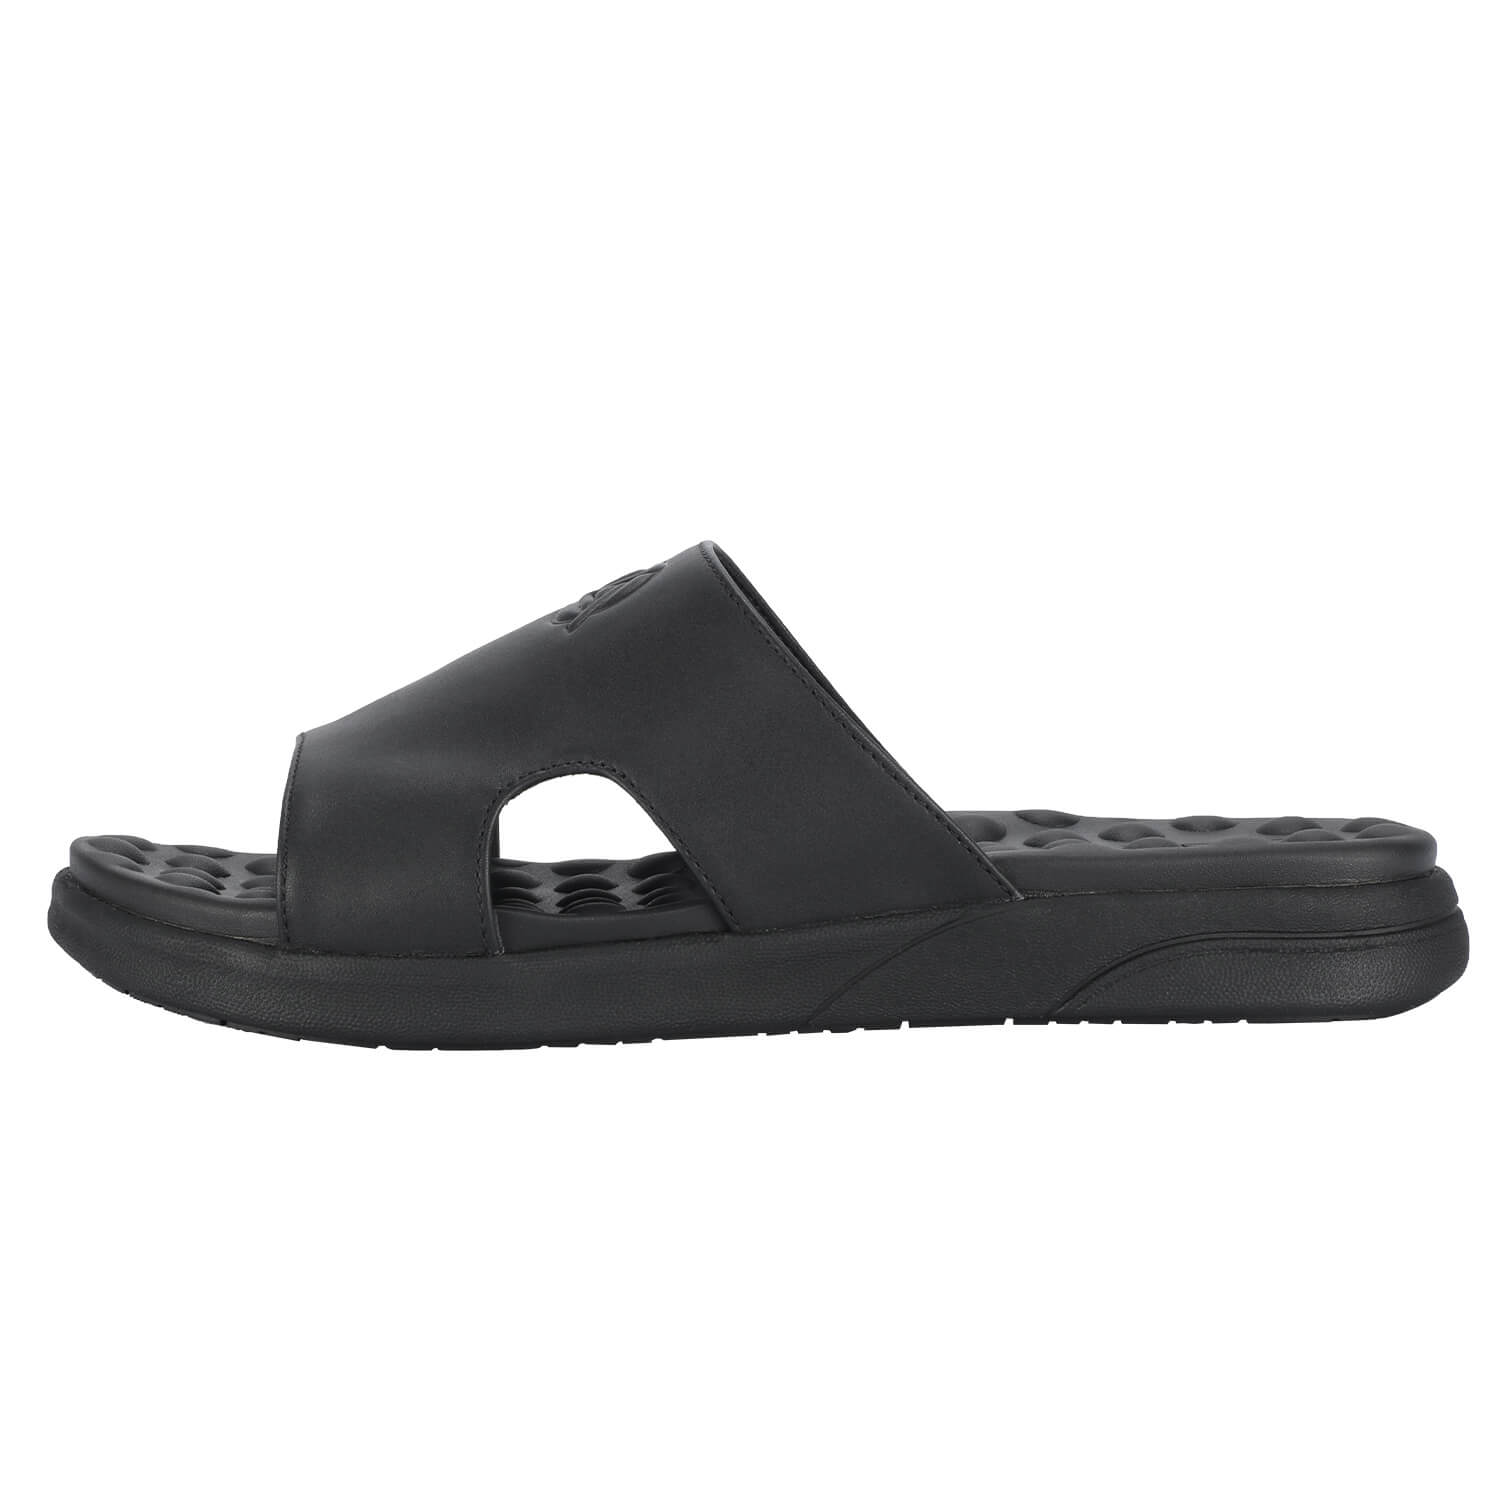 Black Massaging Leather Sandals (Sizes 7-16 Available) Zeba Shoes